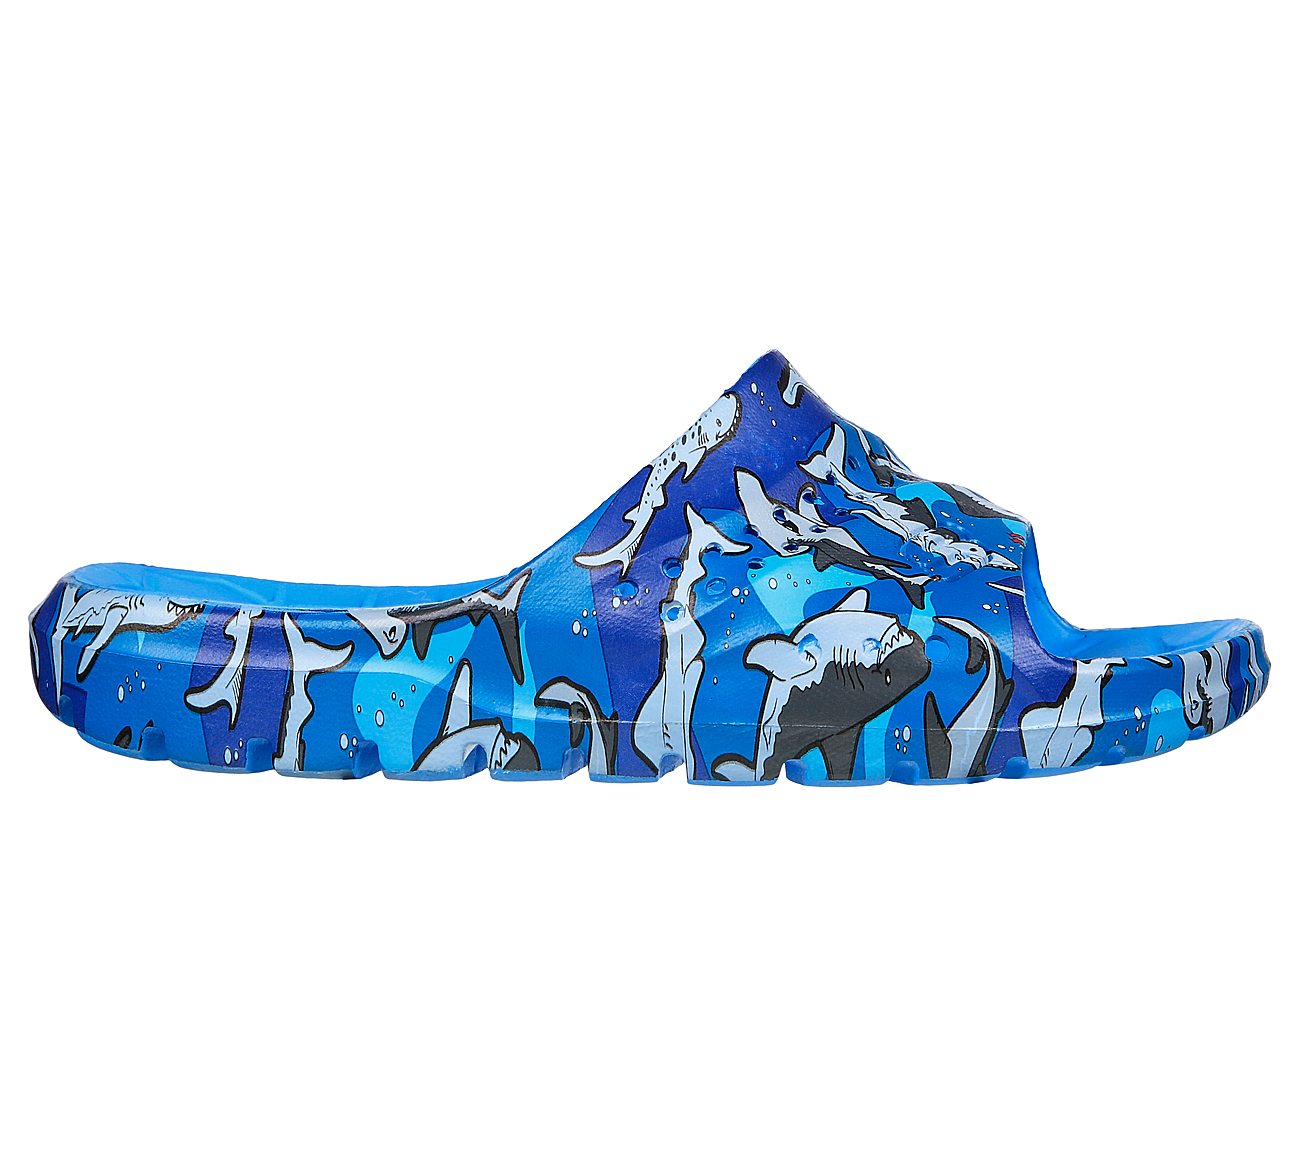 HOGAN - DANGEROUS WATERS, BLUE/LIGHT BLUE Footwear Lateral View